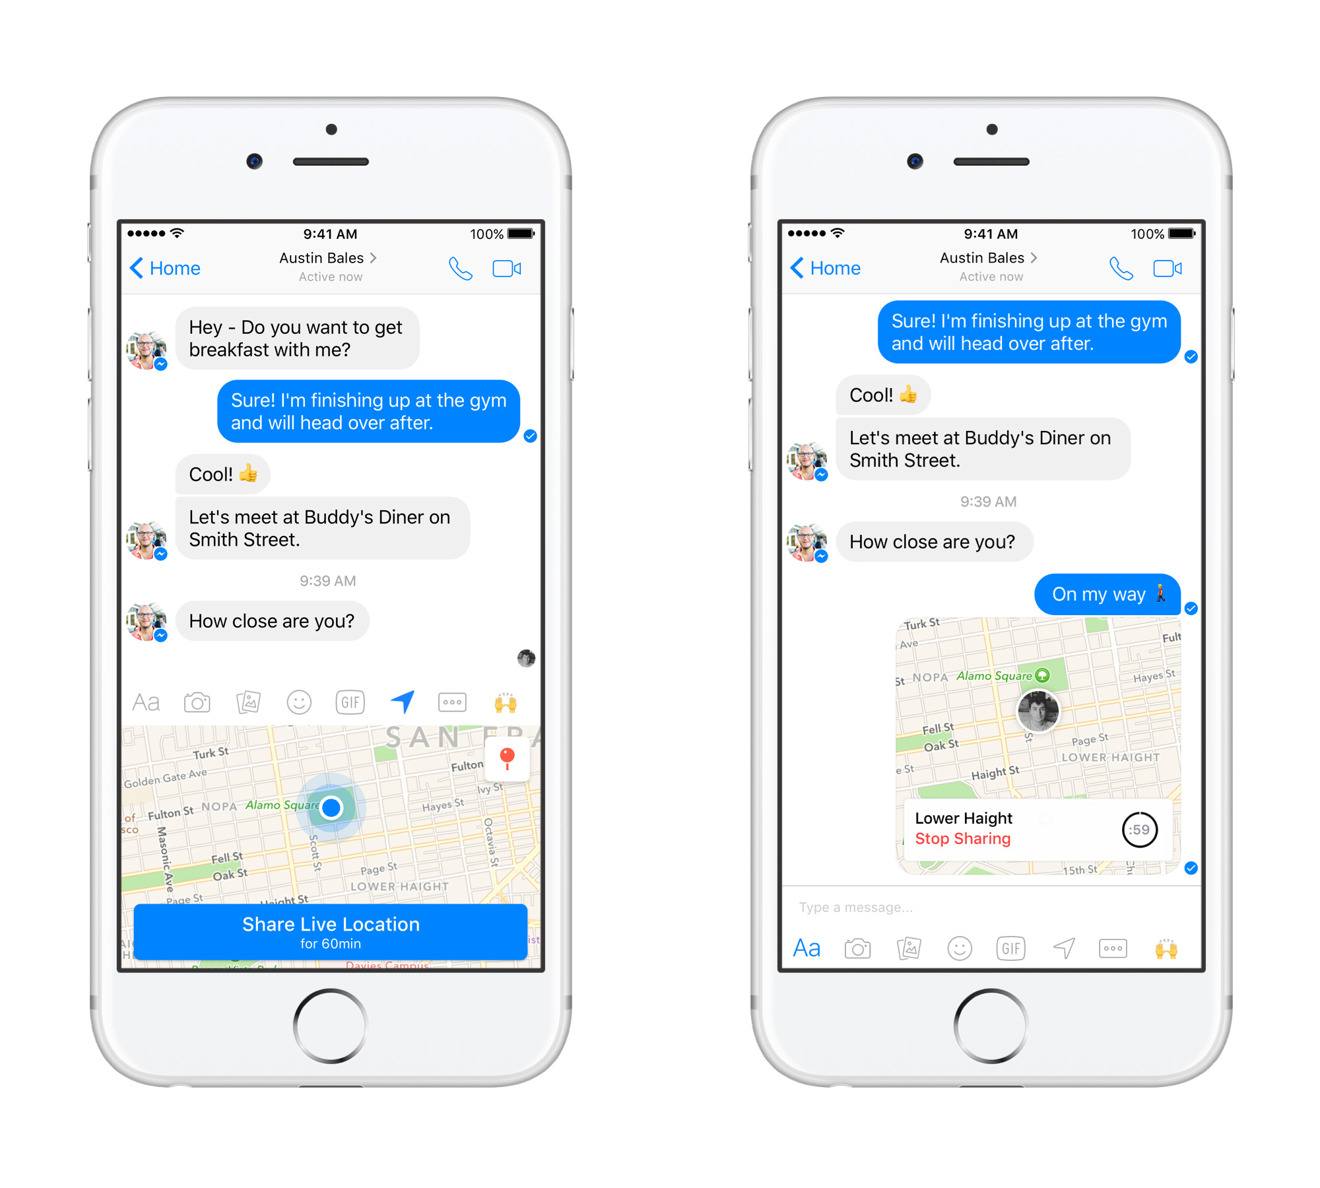 facebook messenger app for mac 2018